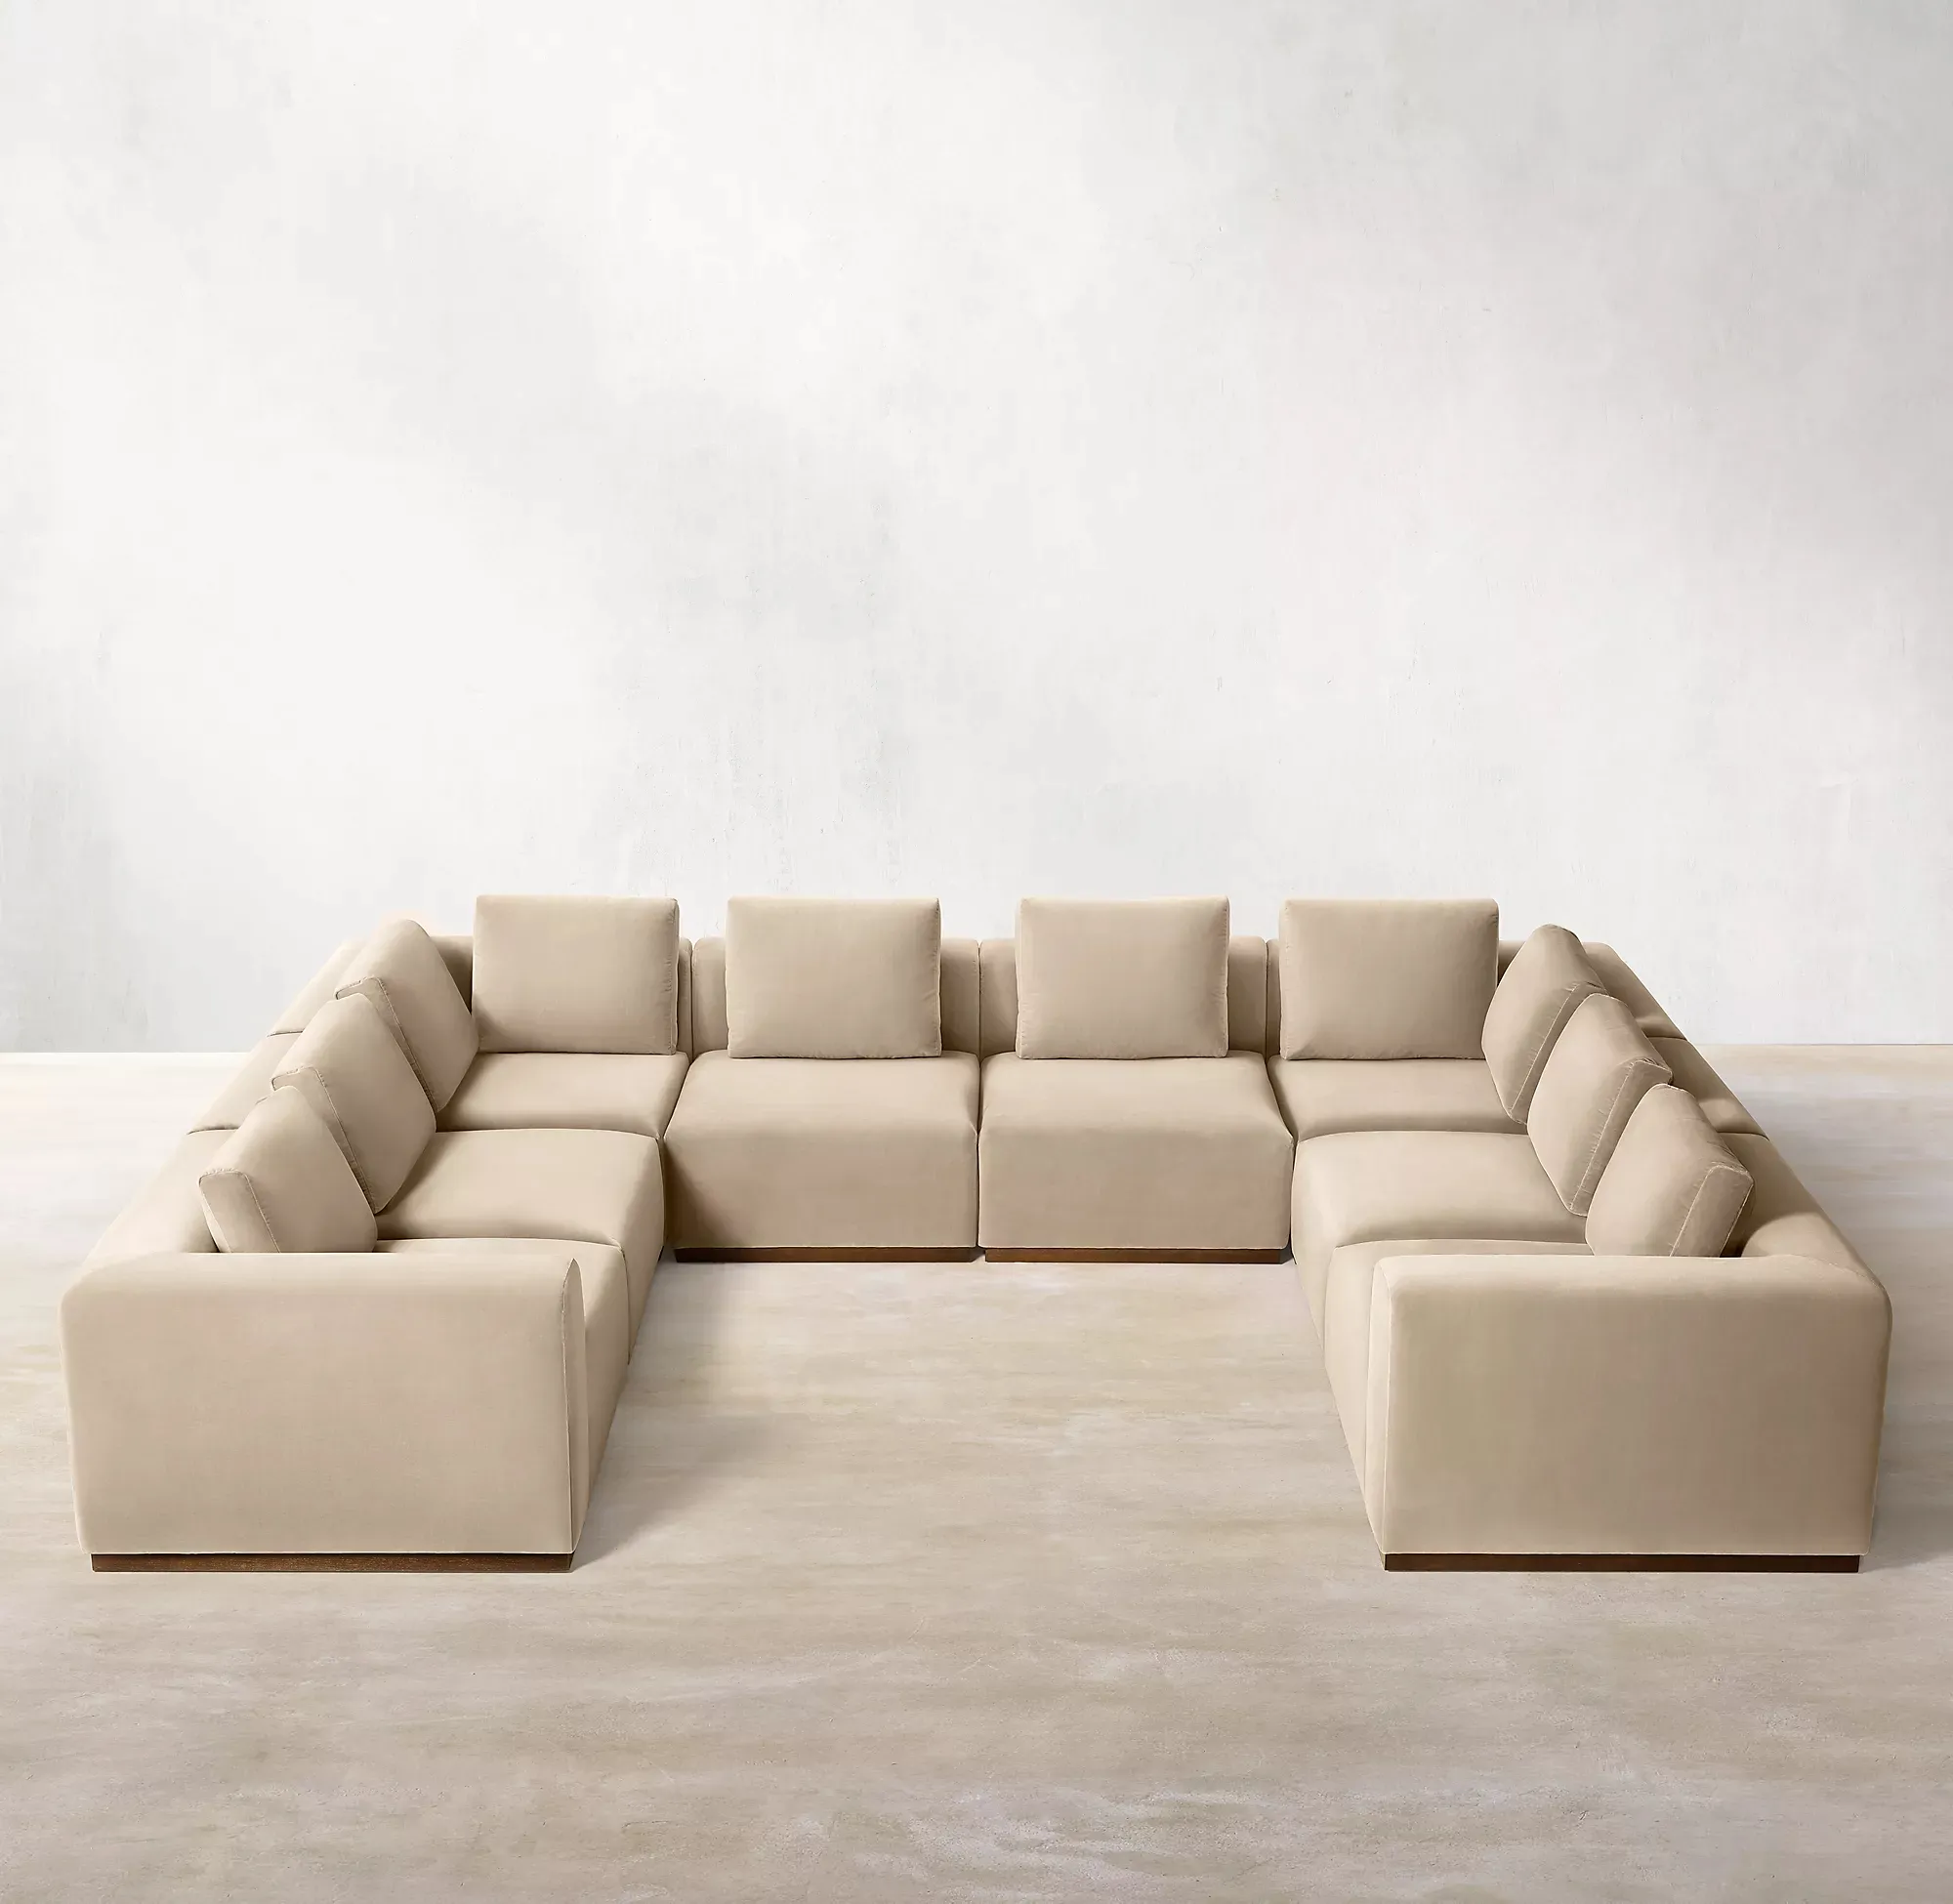 Modular modular sofa U sectional custom color home indoor furniture wood base 8 seat living room sofas